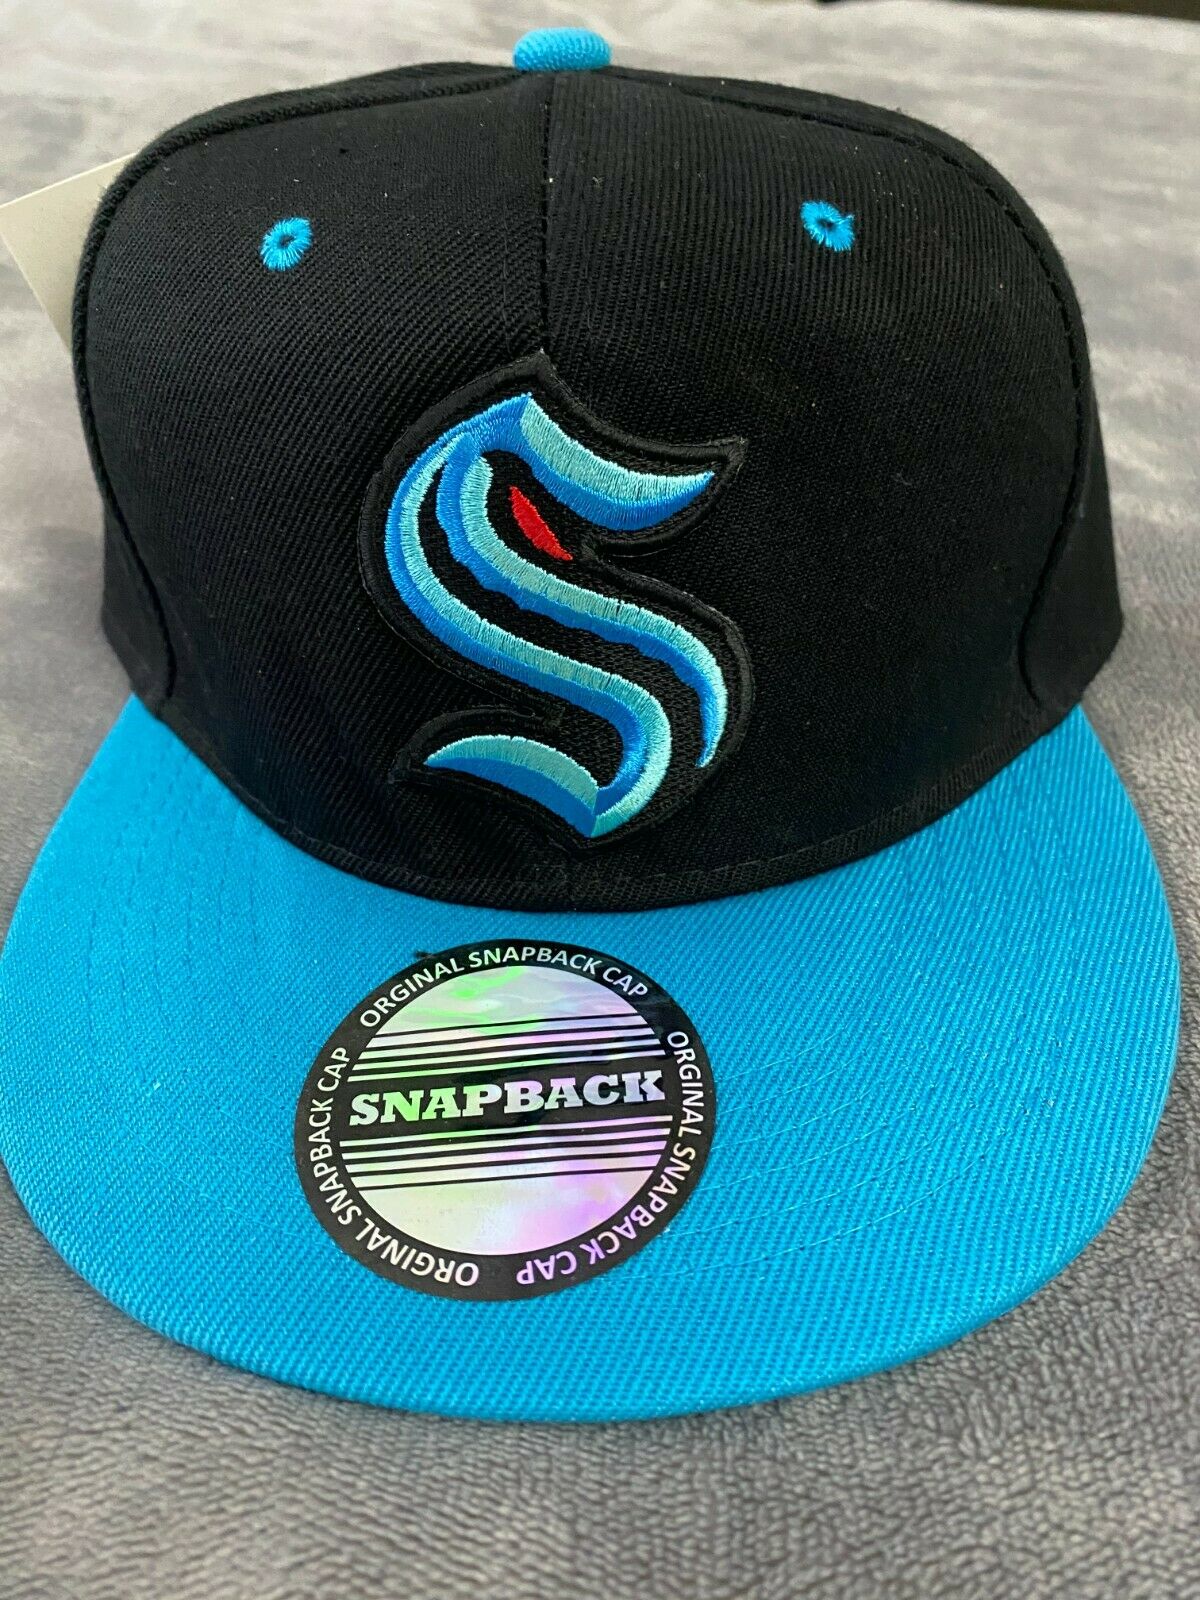 🏒 Seattle Kraken Nhl Hockey Official Logo Hat Cap Black & Blue Snapback New 🏒